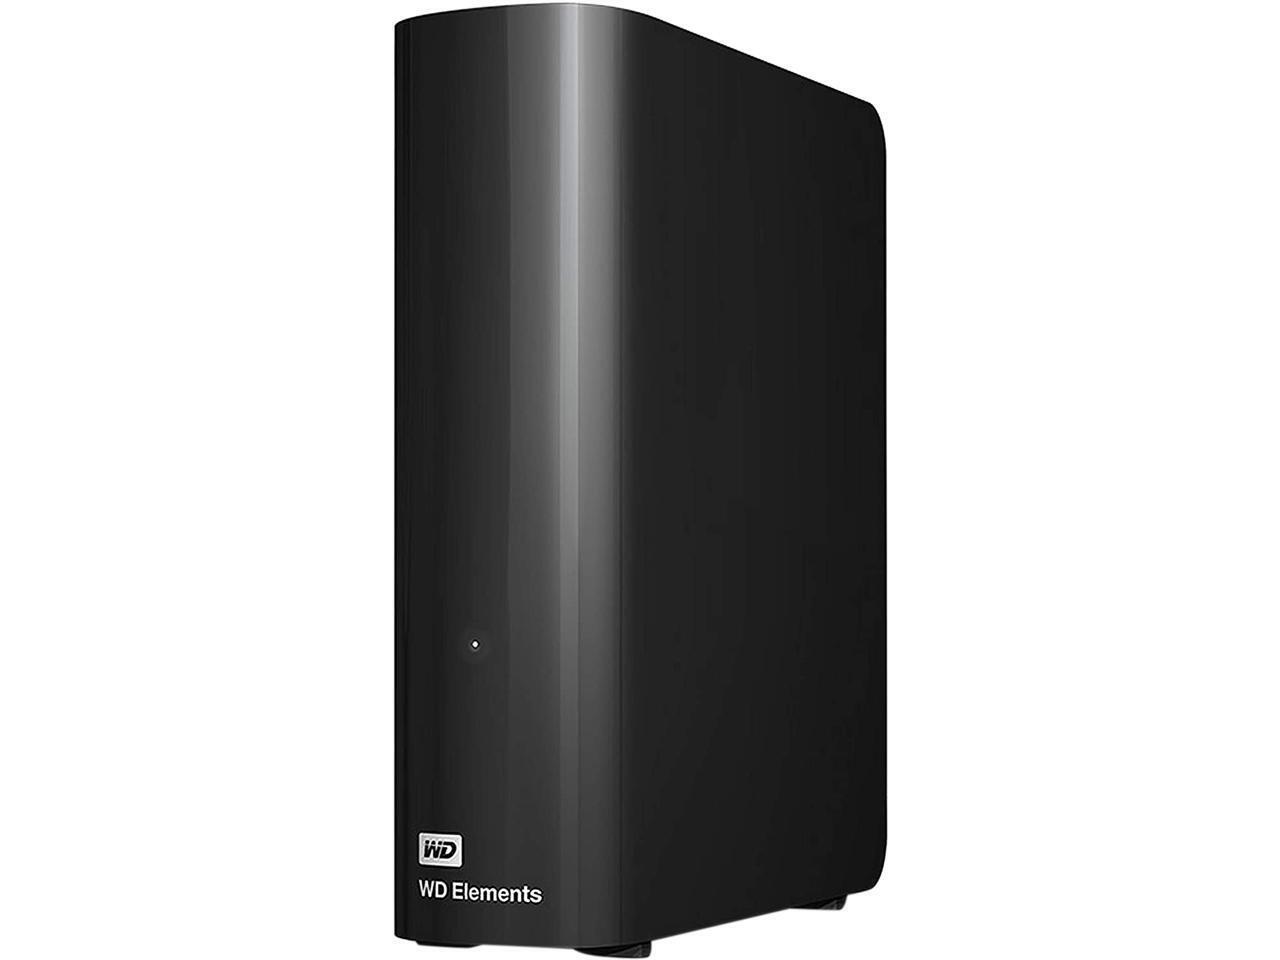 WD Elements WDBWLG0160HBK-NESN 16 TB Desktop Hard Drive (wdbwlg0160hbknesn)